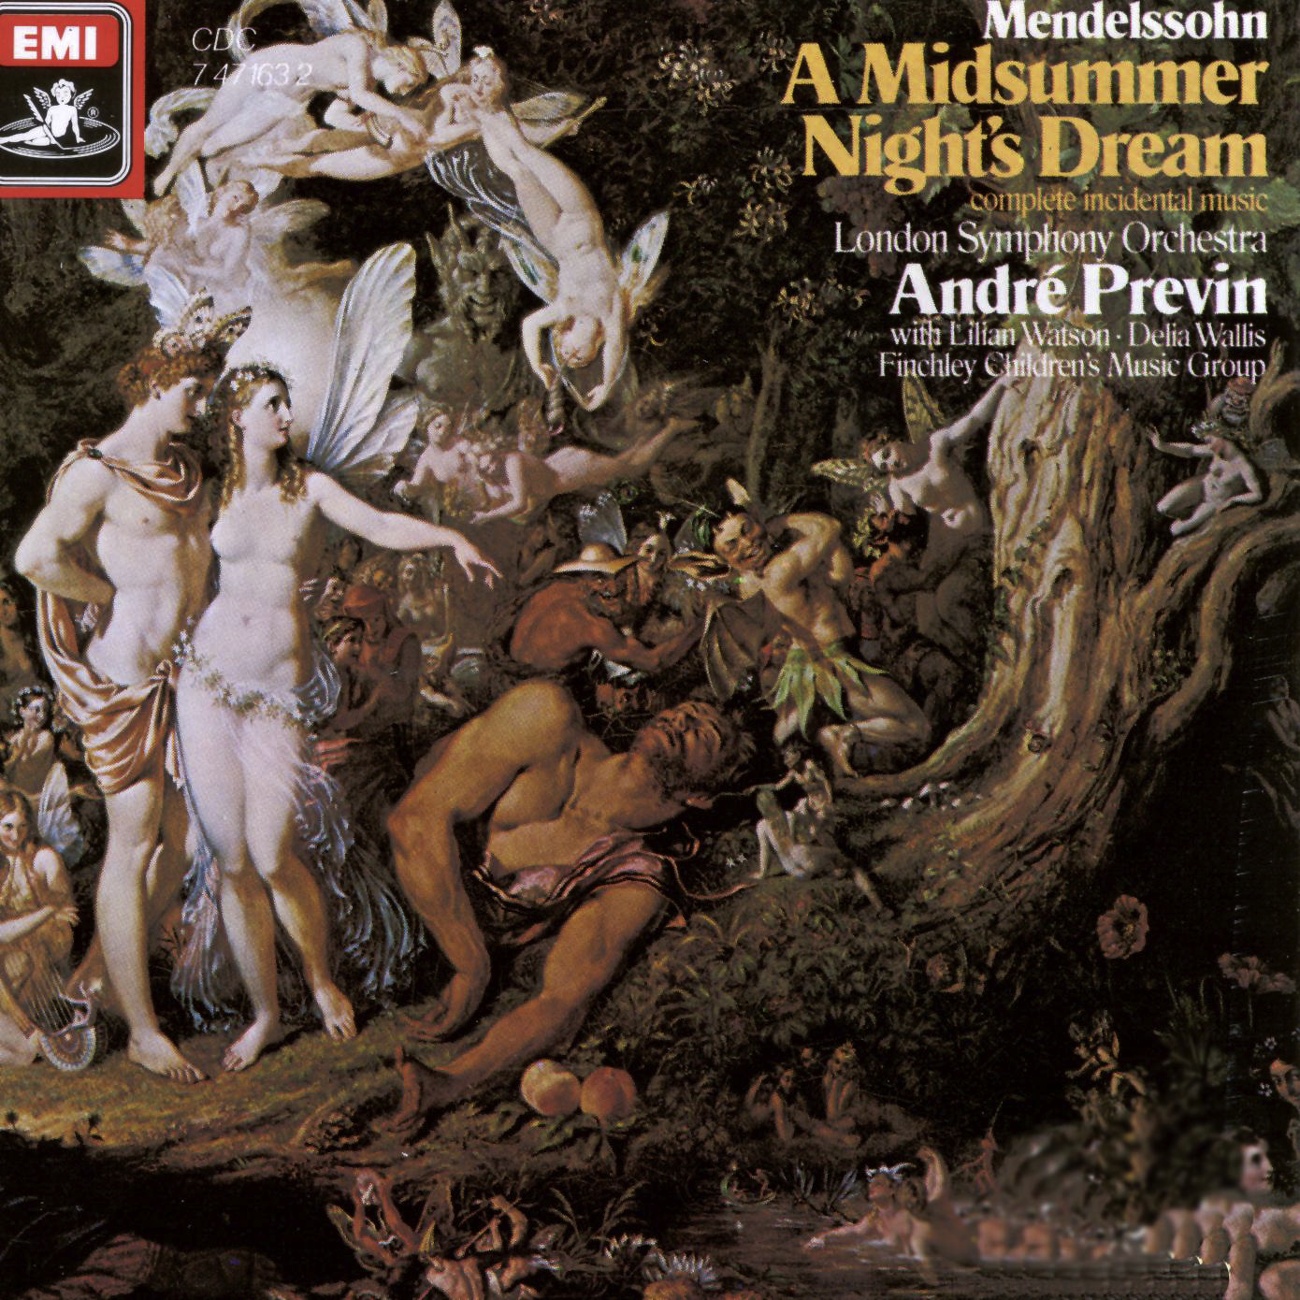 A Midsummer Night's Dream - incidental music Opp. 21 and 61 (1985 Digital Remaster): Entr'acte/Intermezzo (Hermia seeks Lysander